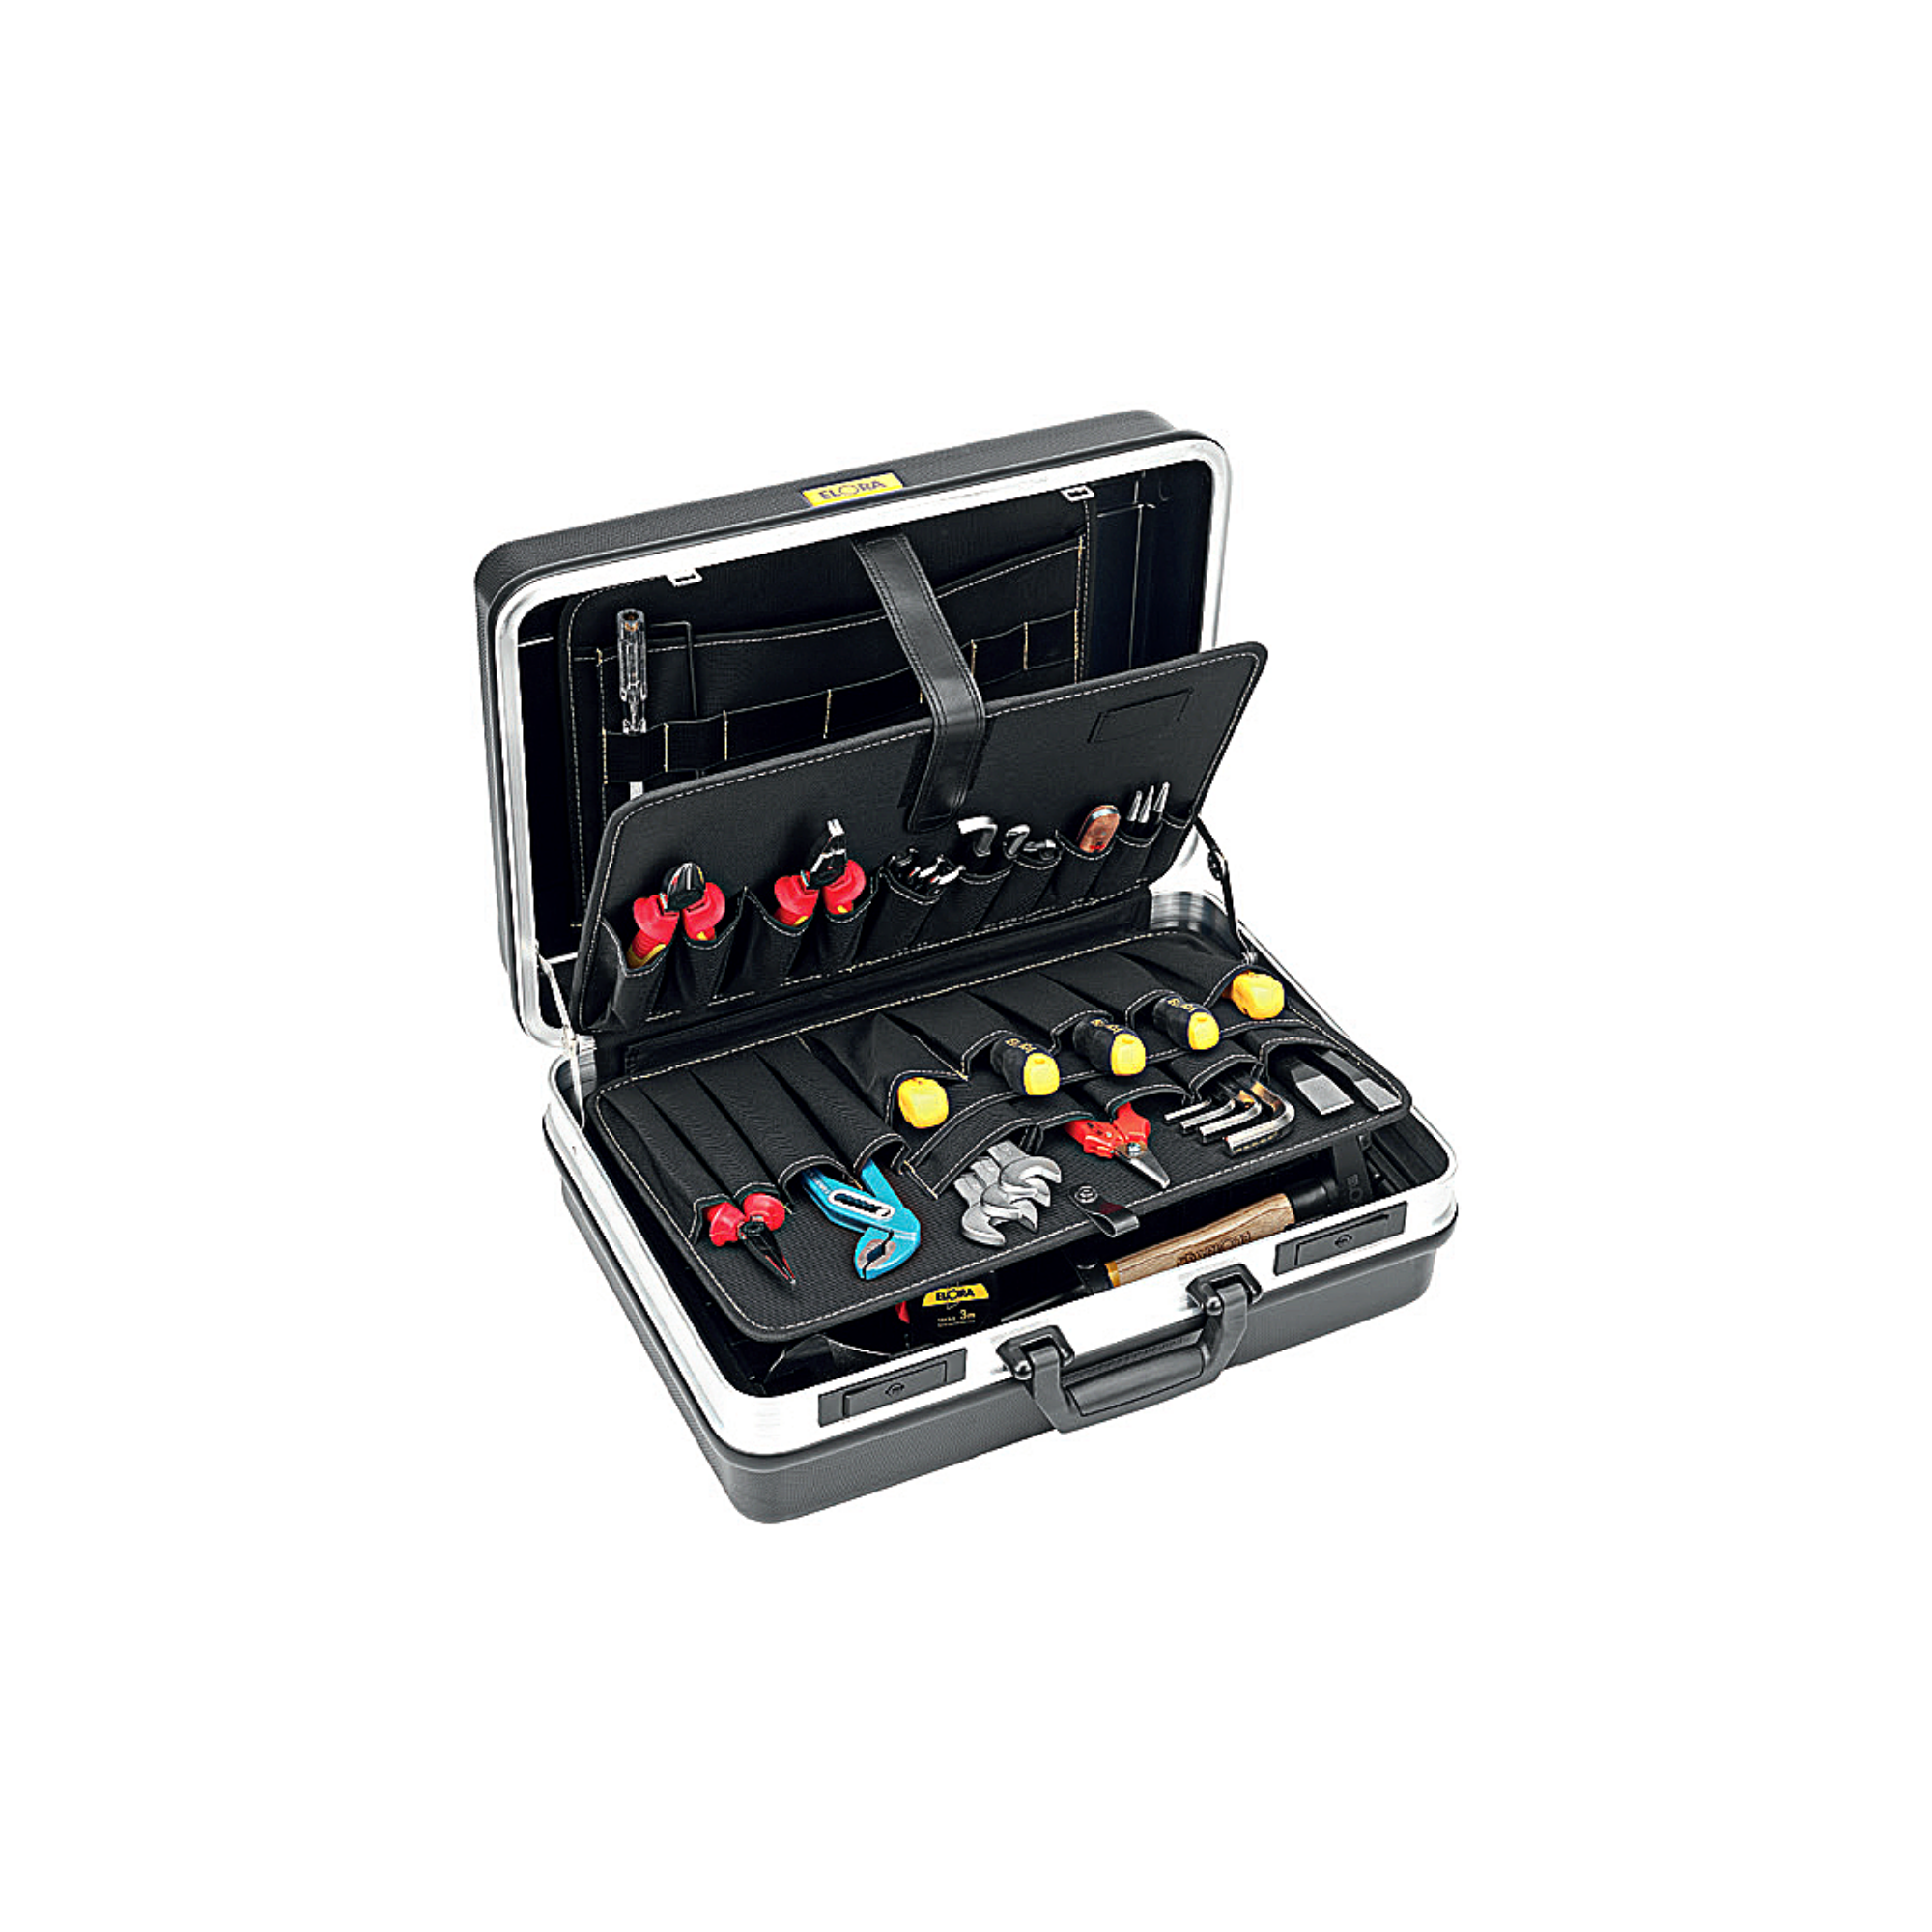 ELORA 1380-L Hard Protective Case (ELORA Tools) - Premium Hard Protective Case from ELORA - Shop now at Yew Aik.